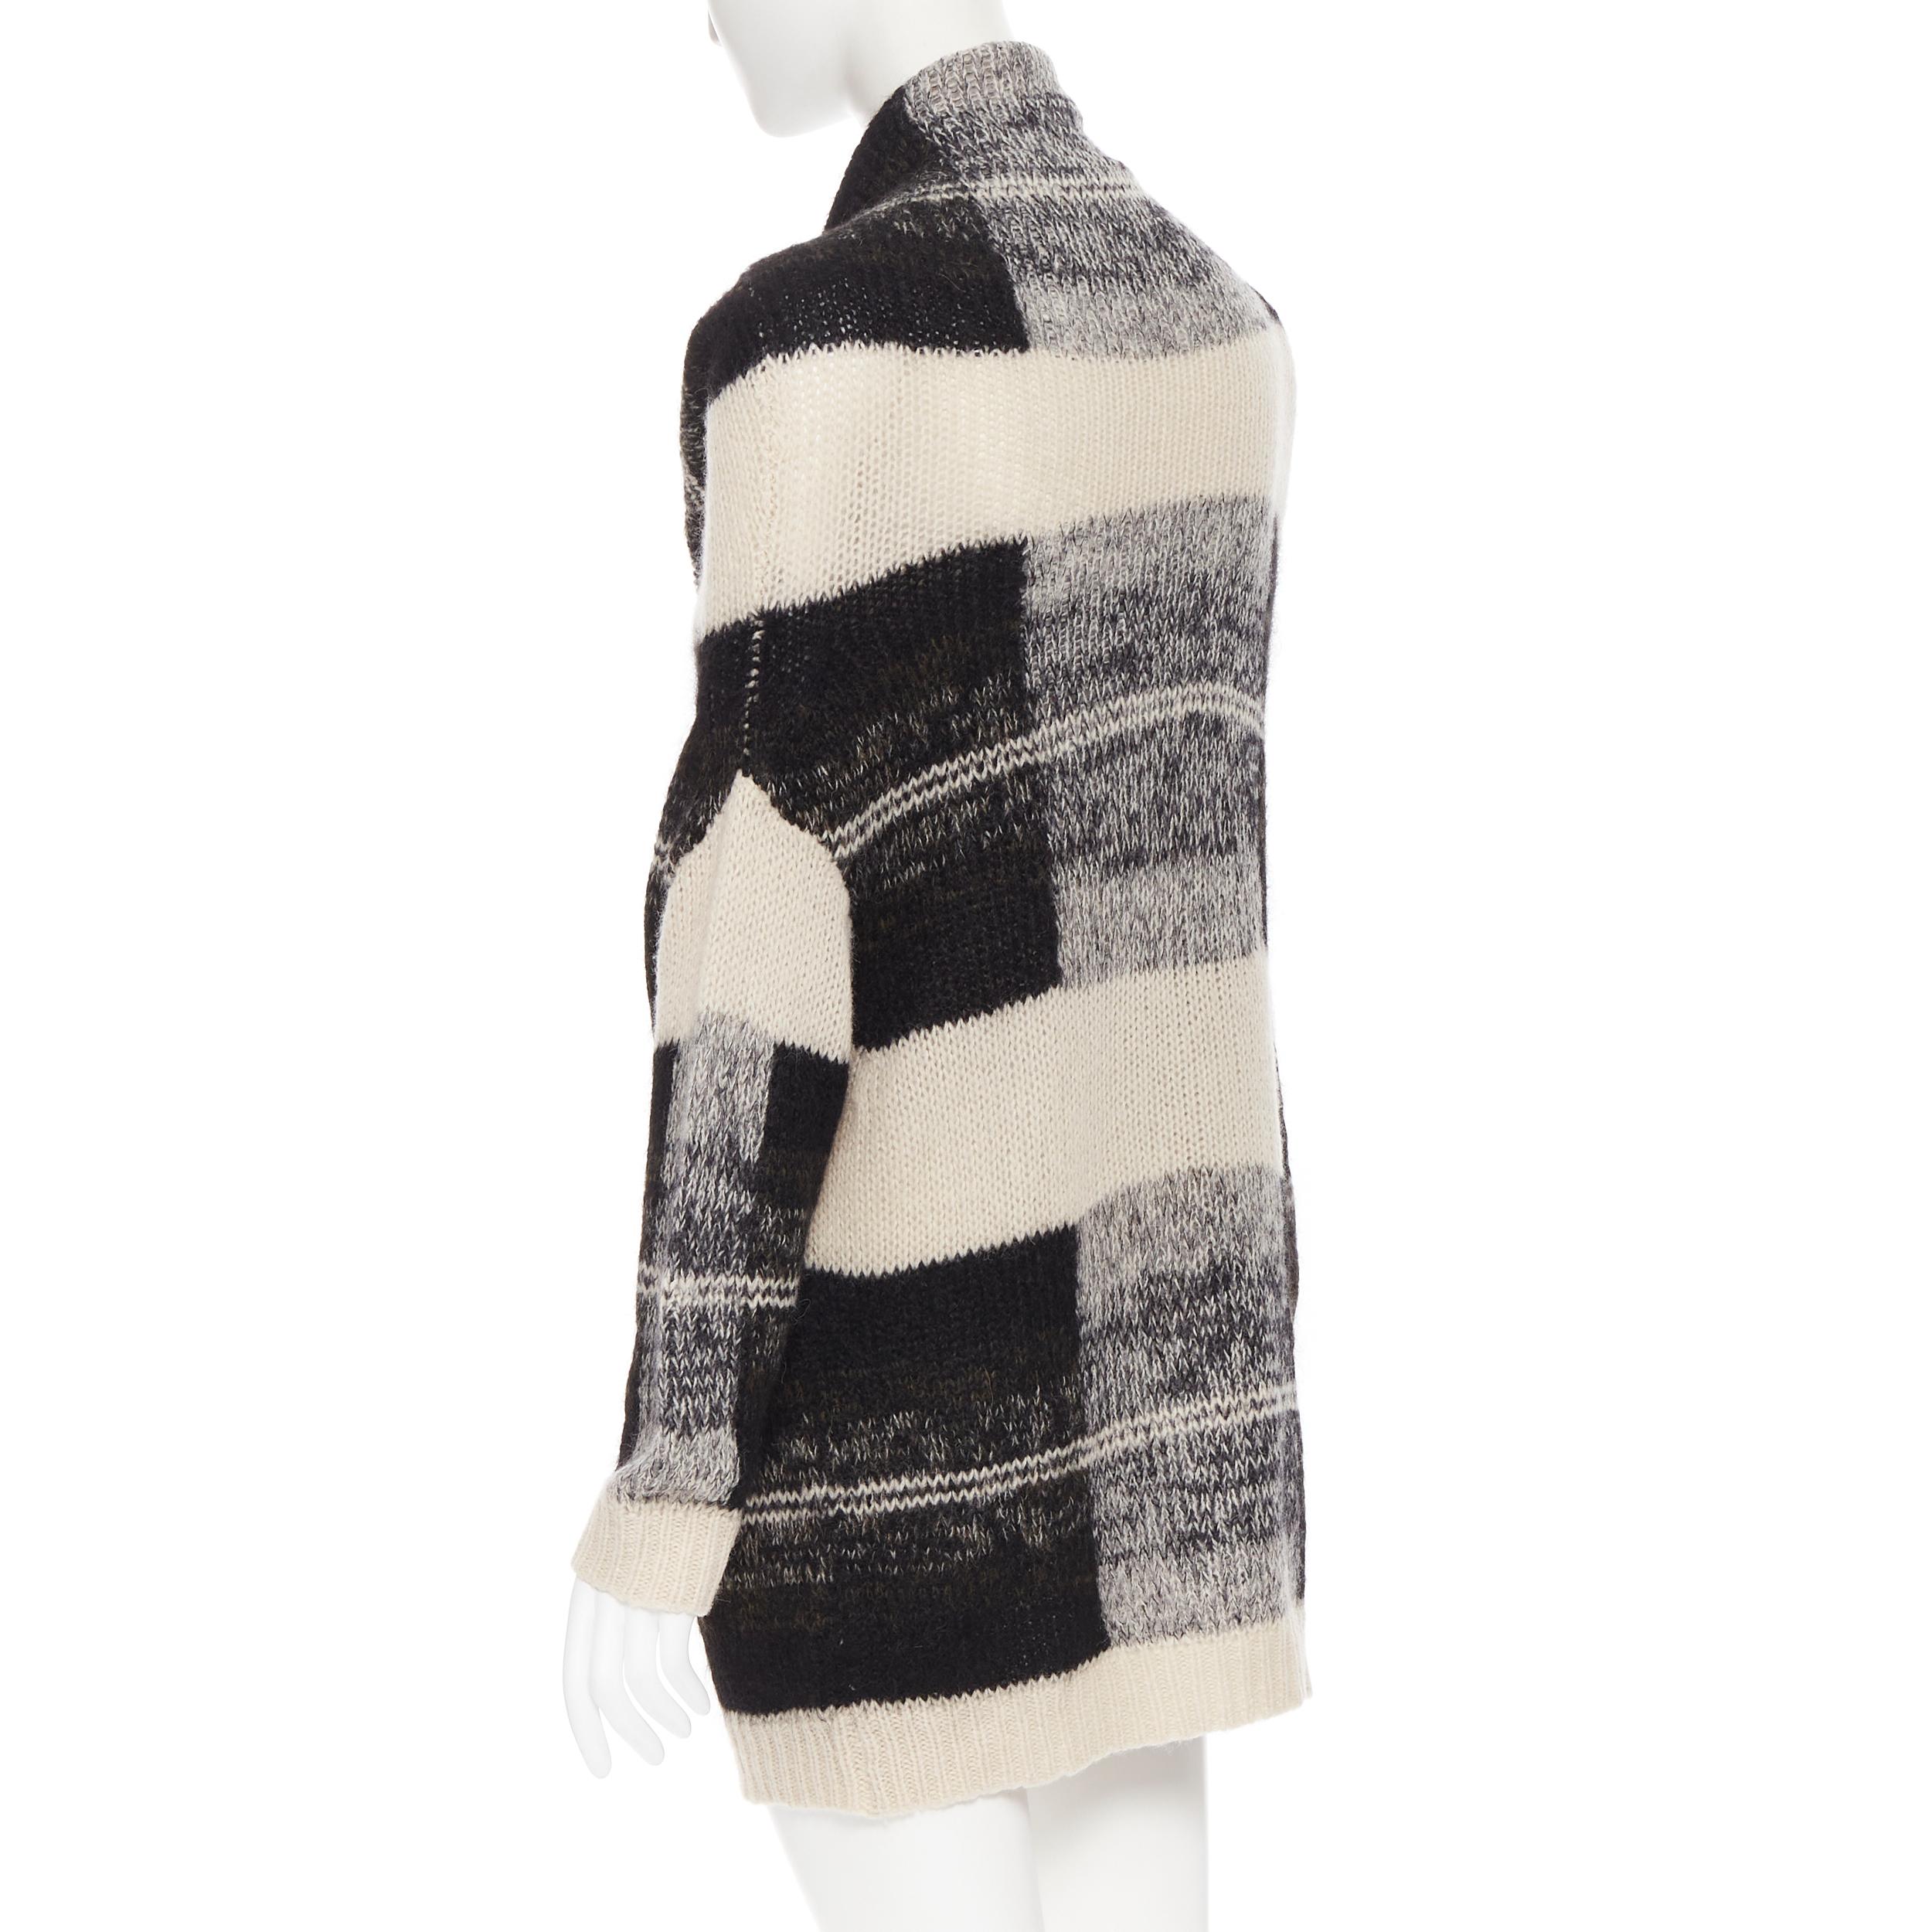 Gray DRIES VAN NOTEN alpaca wool beige black check knit cowl neck sweater dress S